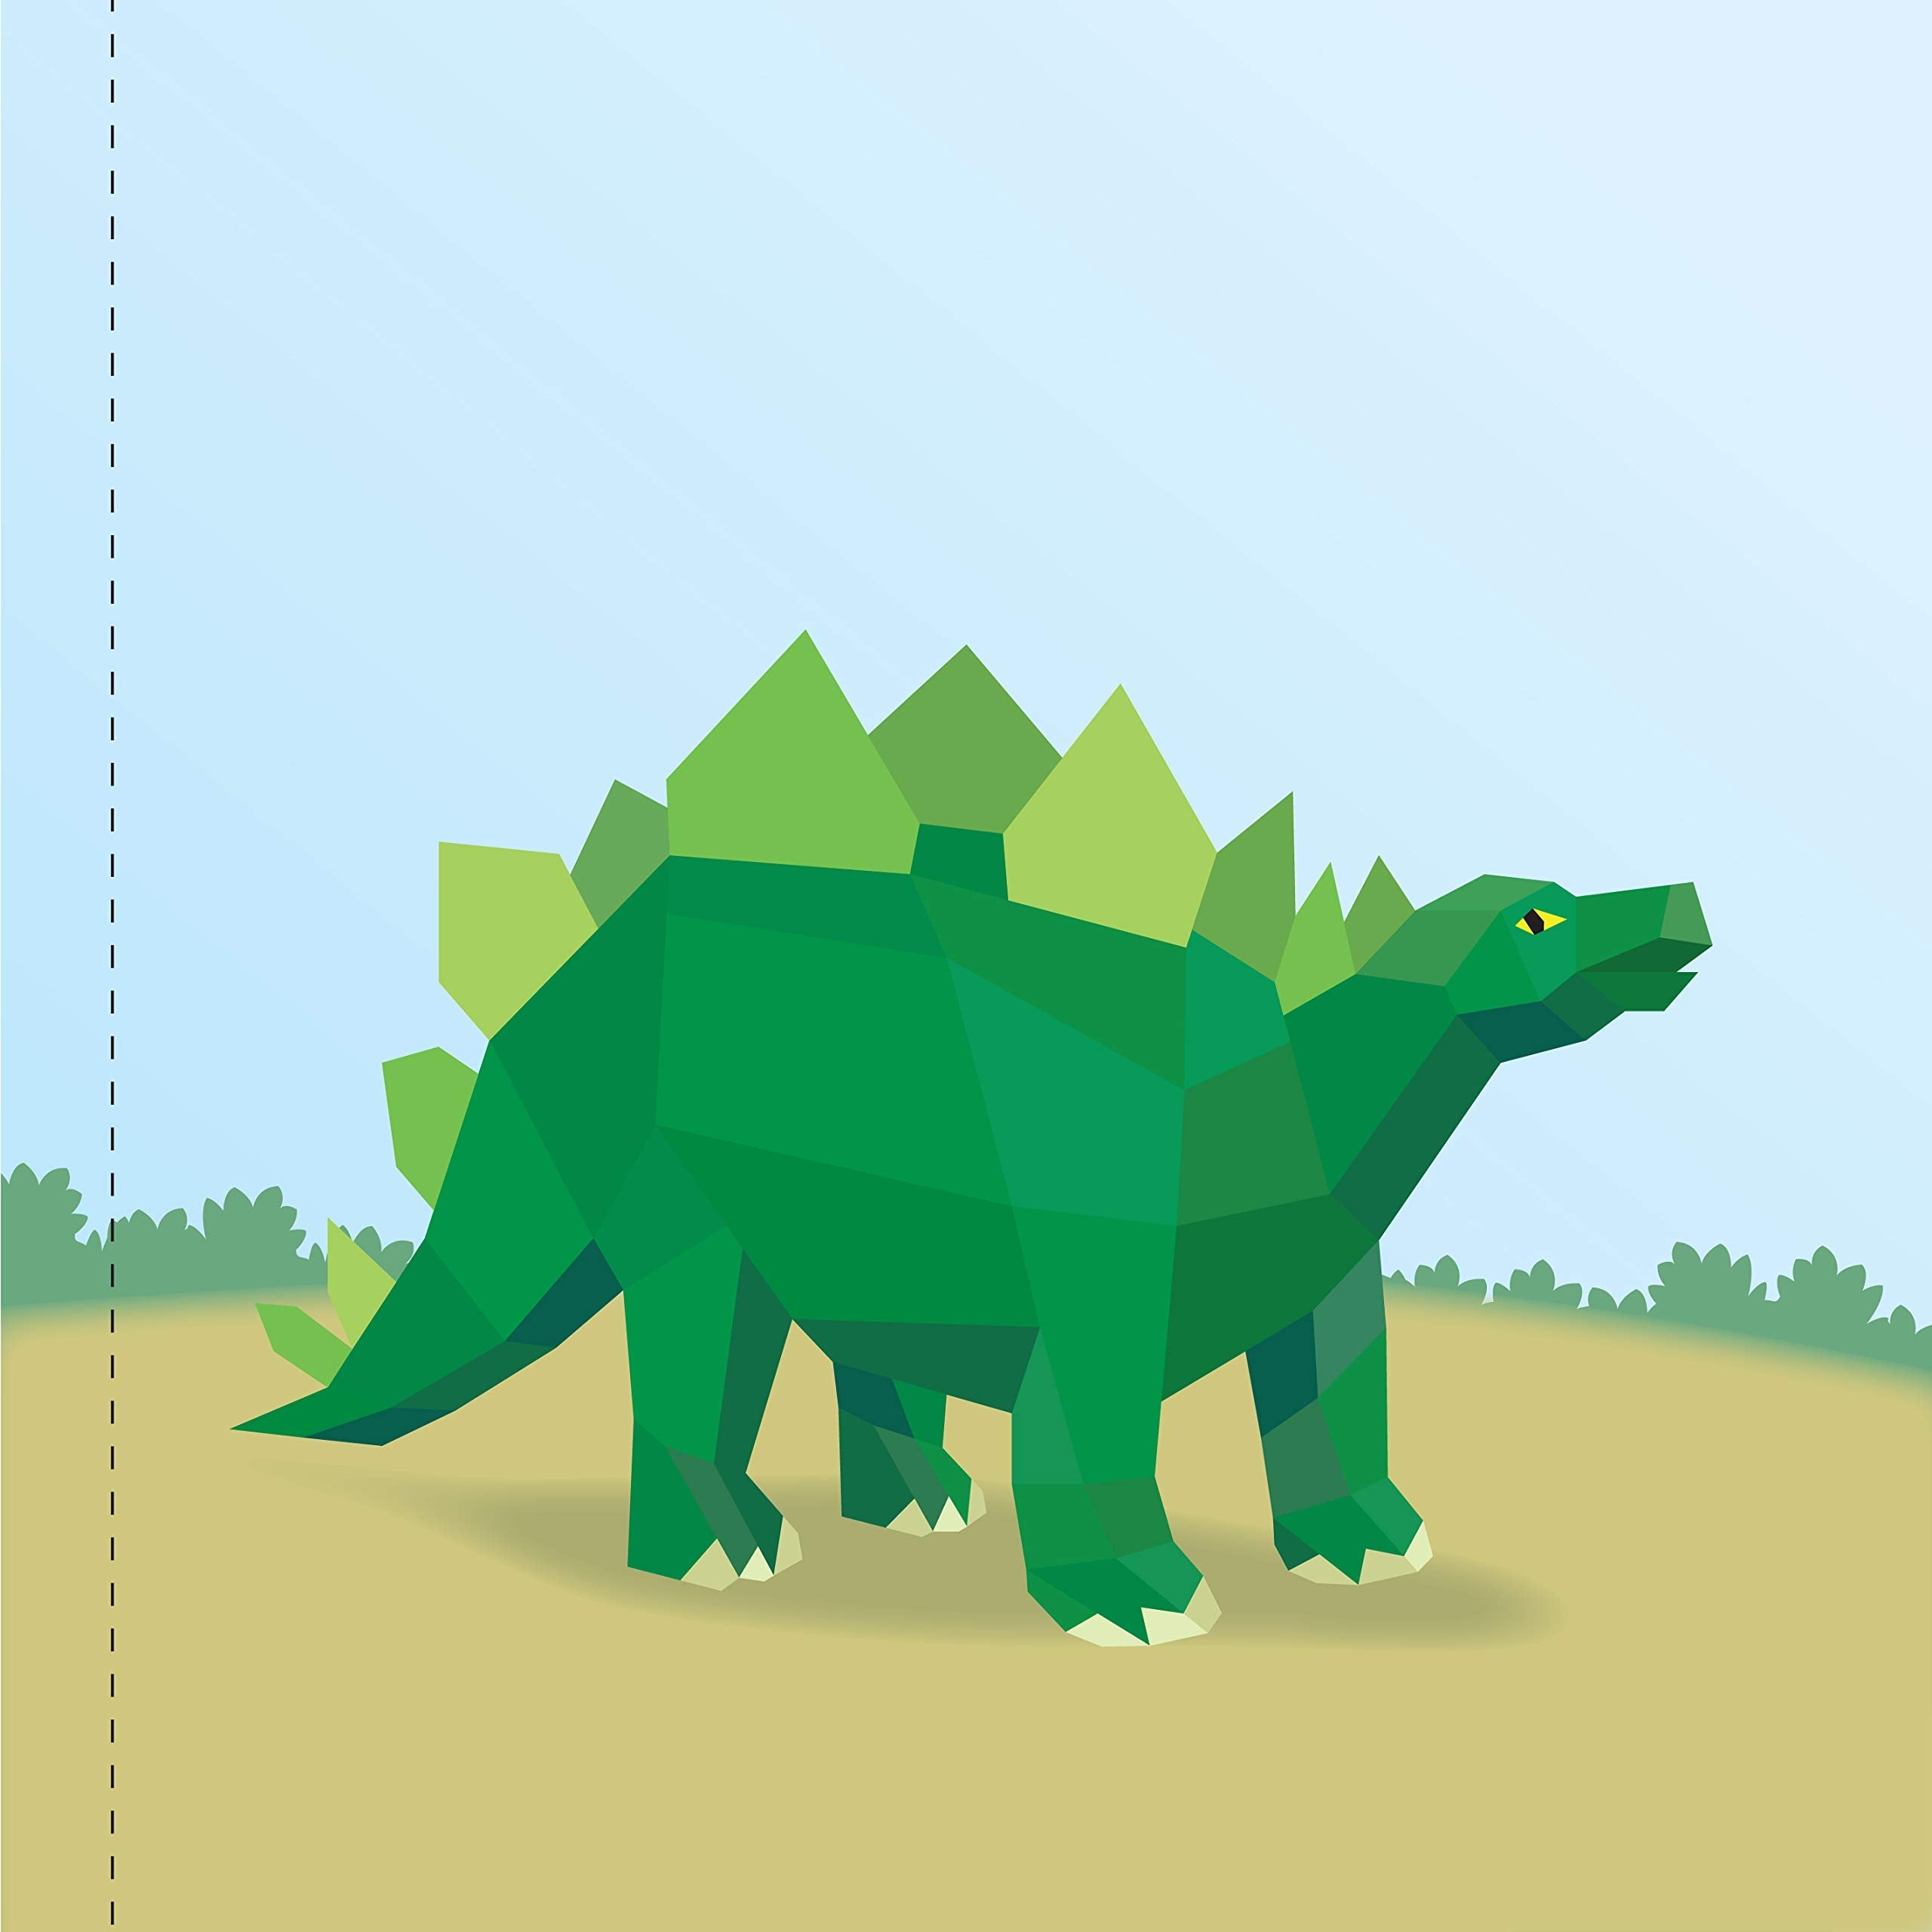 Paint by Sticker Kids: Dinosaurs (Paperback Book)-HACHETTE BOOK GROUP USA-Little Giant Kidz